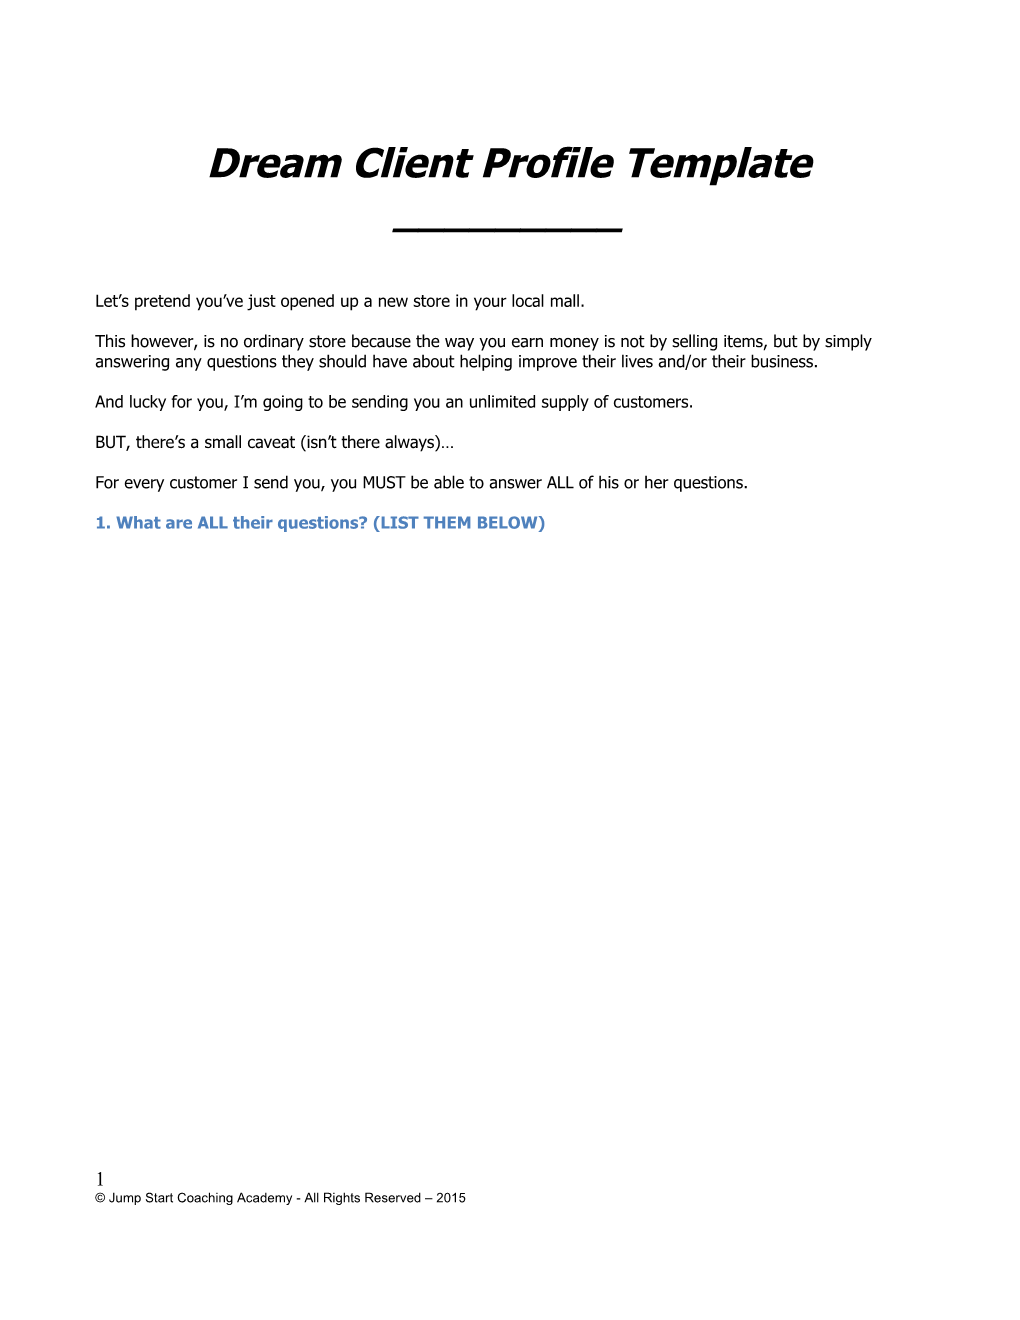 Dream Client Profile Template